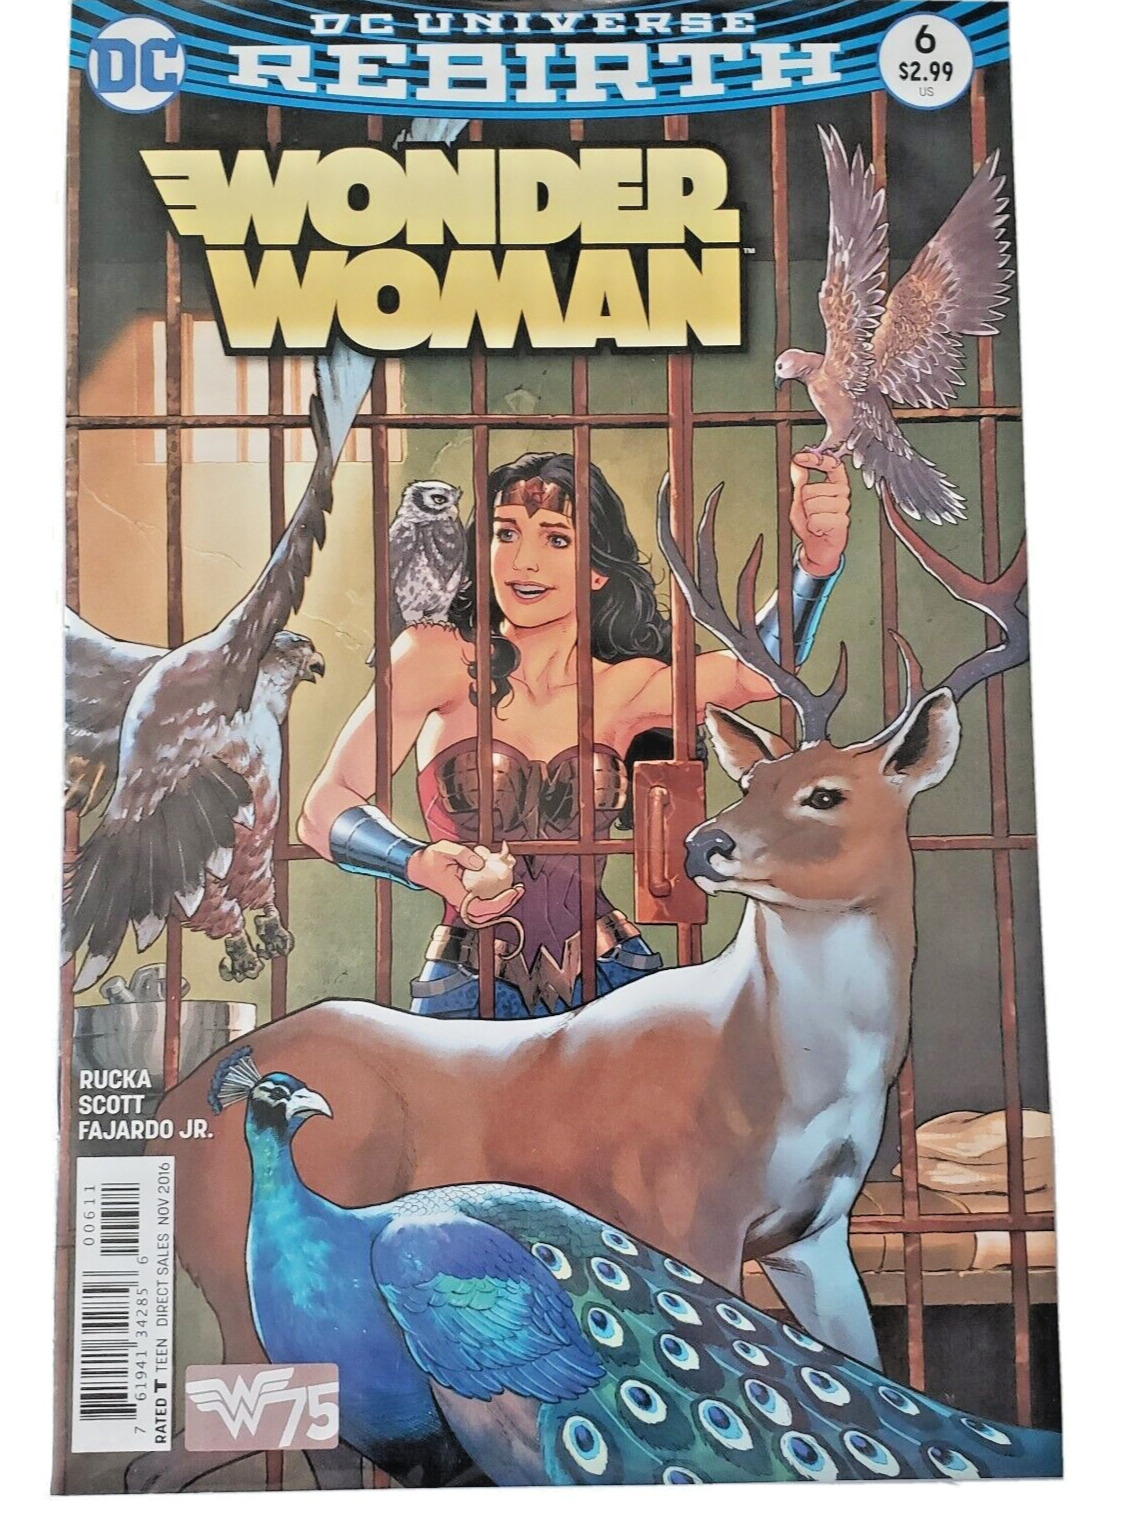 DC Comics WONDER WOMAN #6 Year One Rebirth 75th Anniversary Near Minty